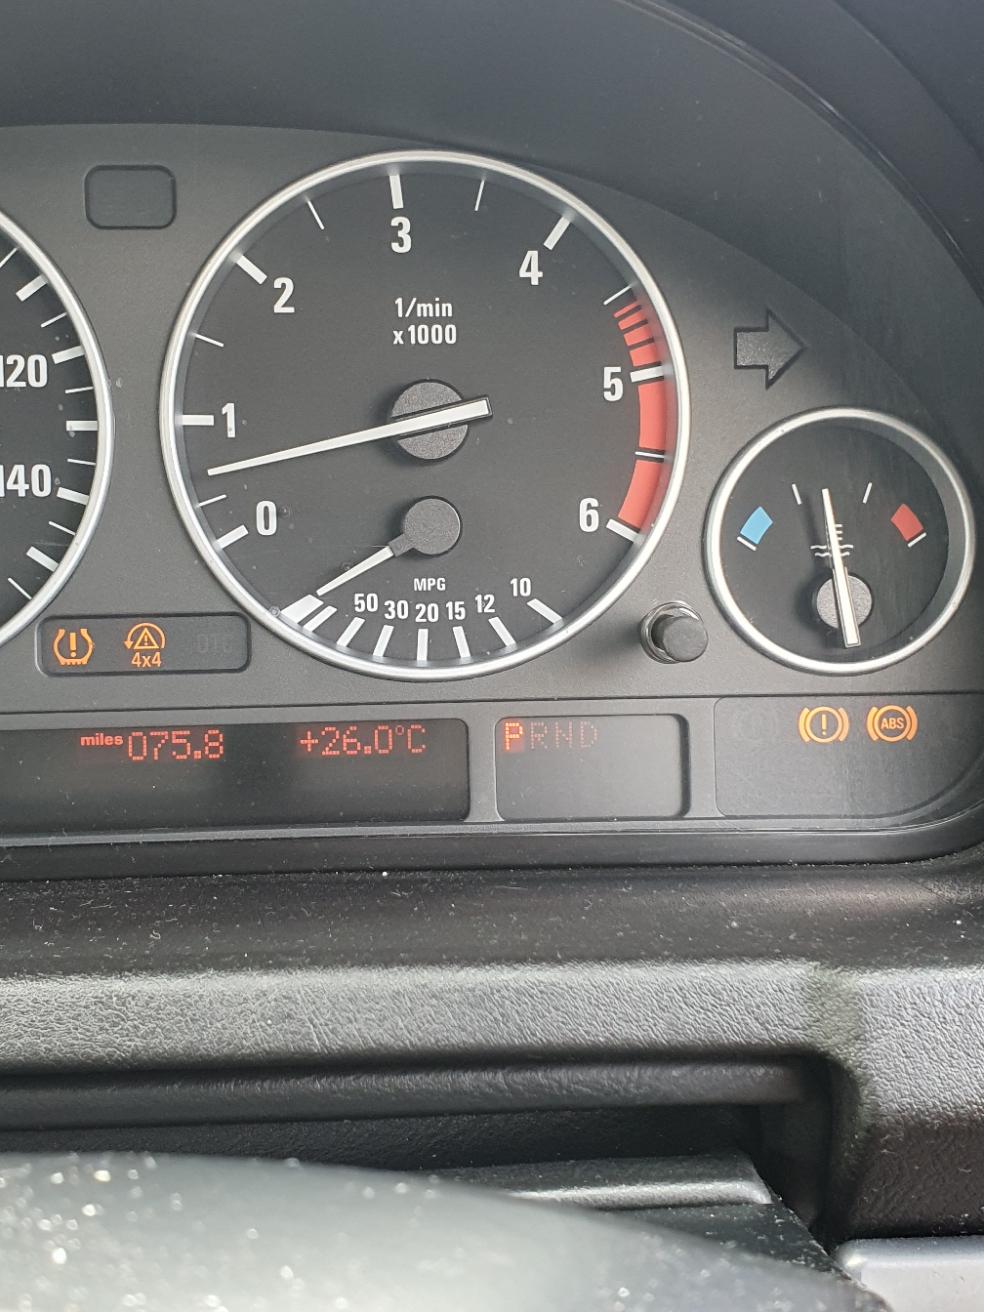 BMW Dashboard Indicator & Warning Lights